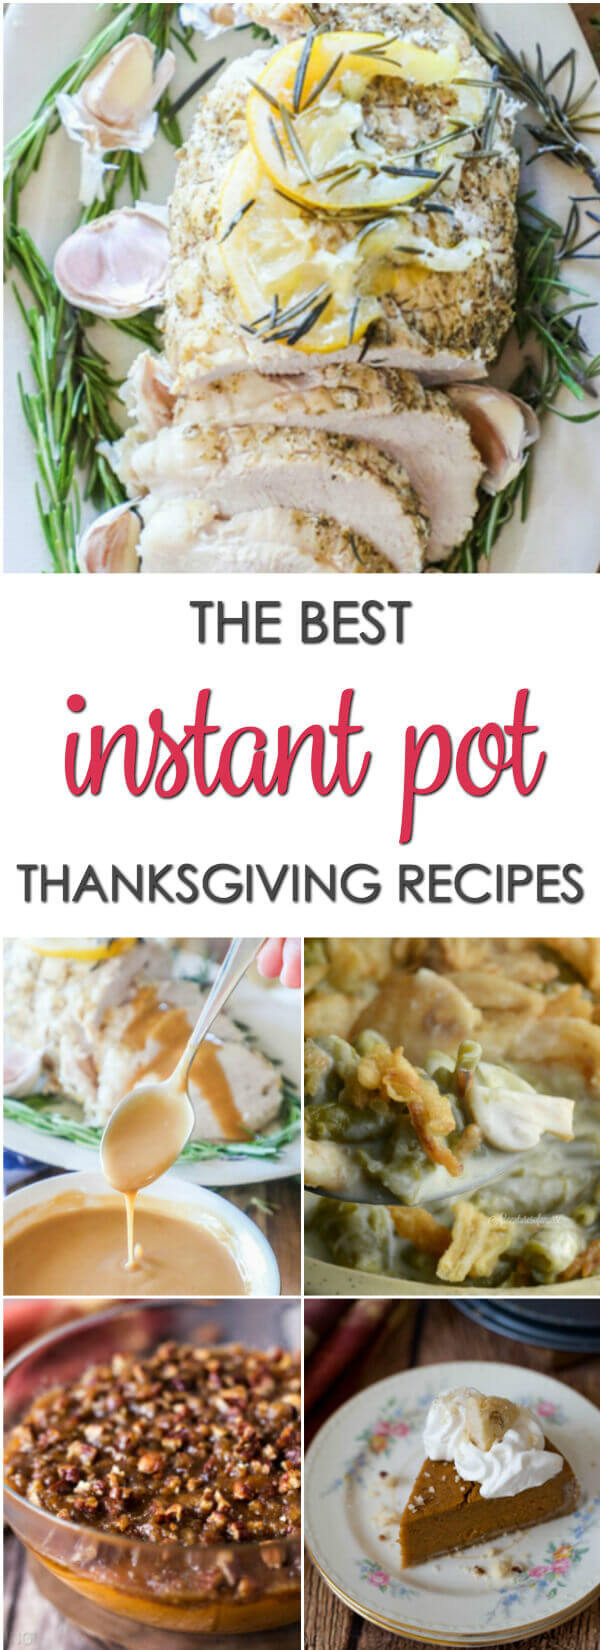 Instant Pot Thanksgiving Recipes
 Easy Instant Pot Recipes for Thanksgiving